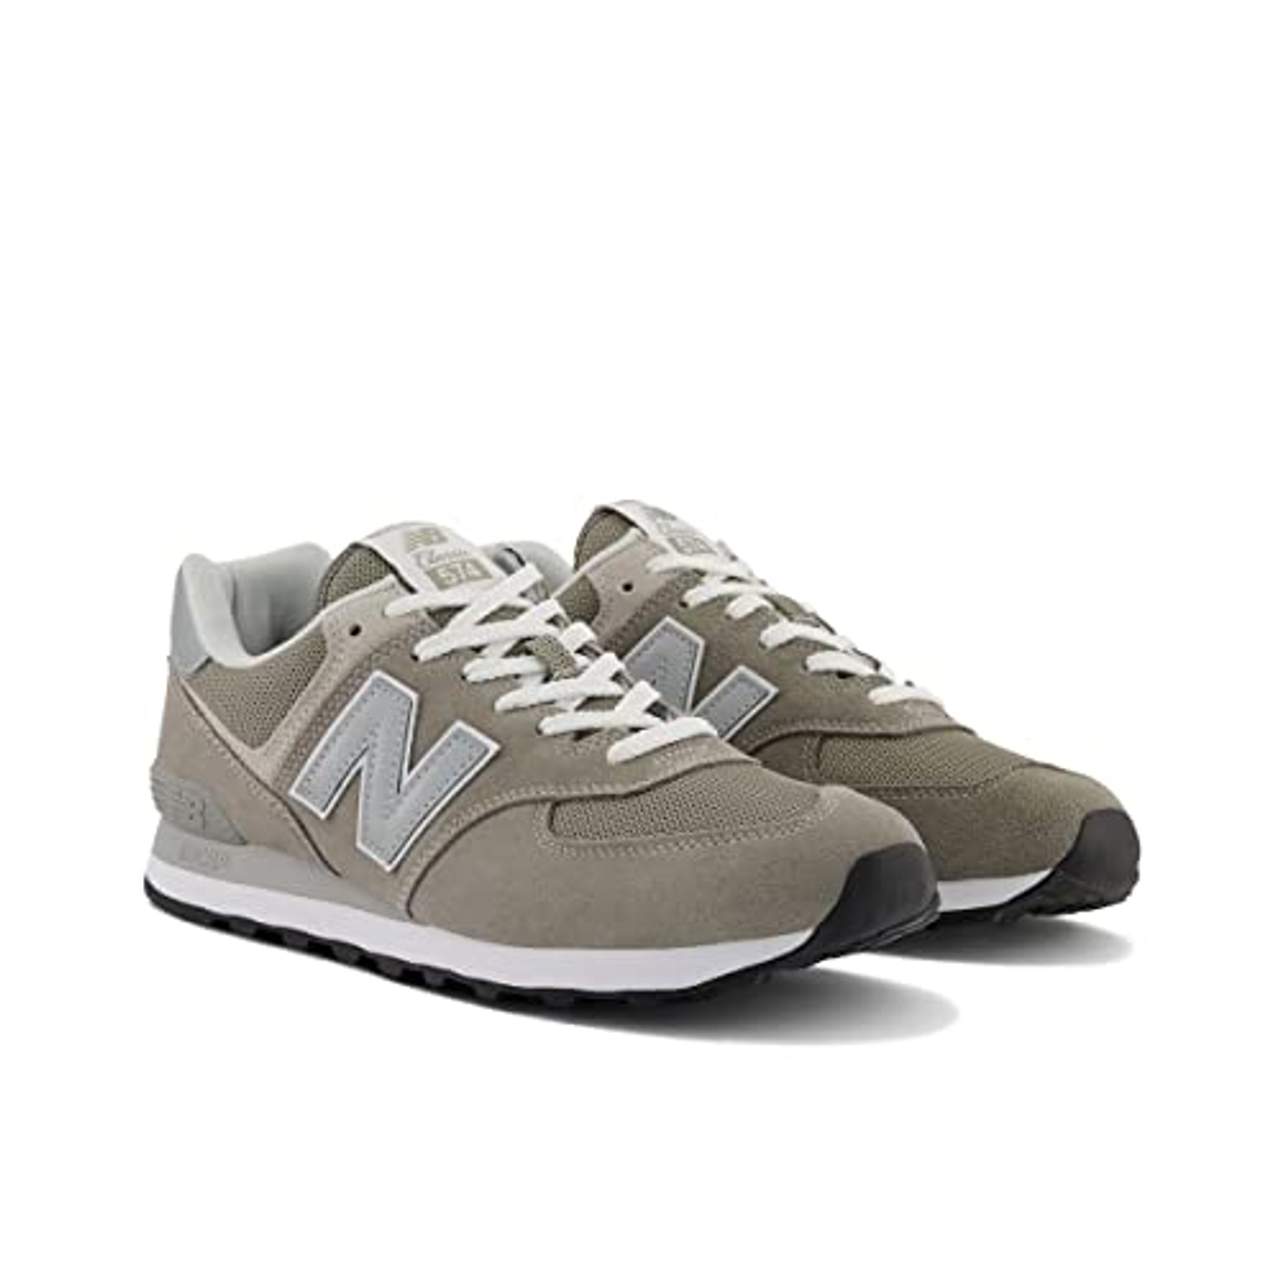 New Balance Sneaker Herren ML574EGG Grau Egg Grey